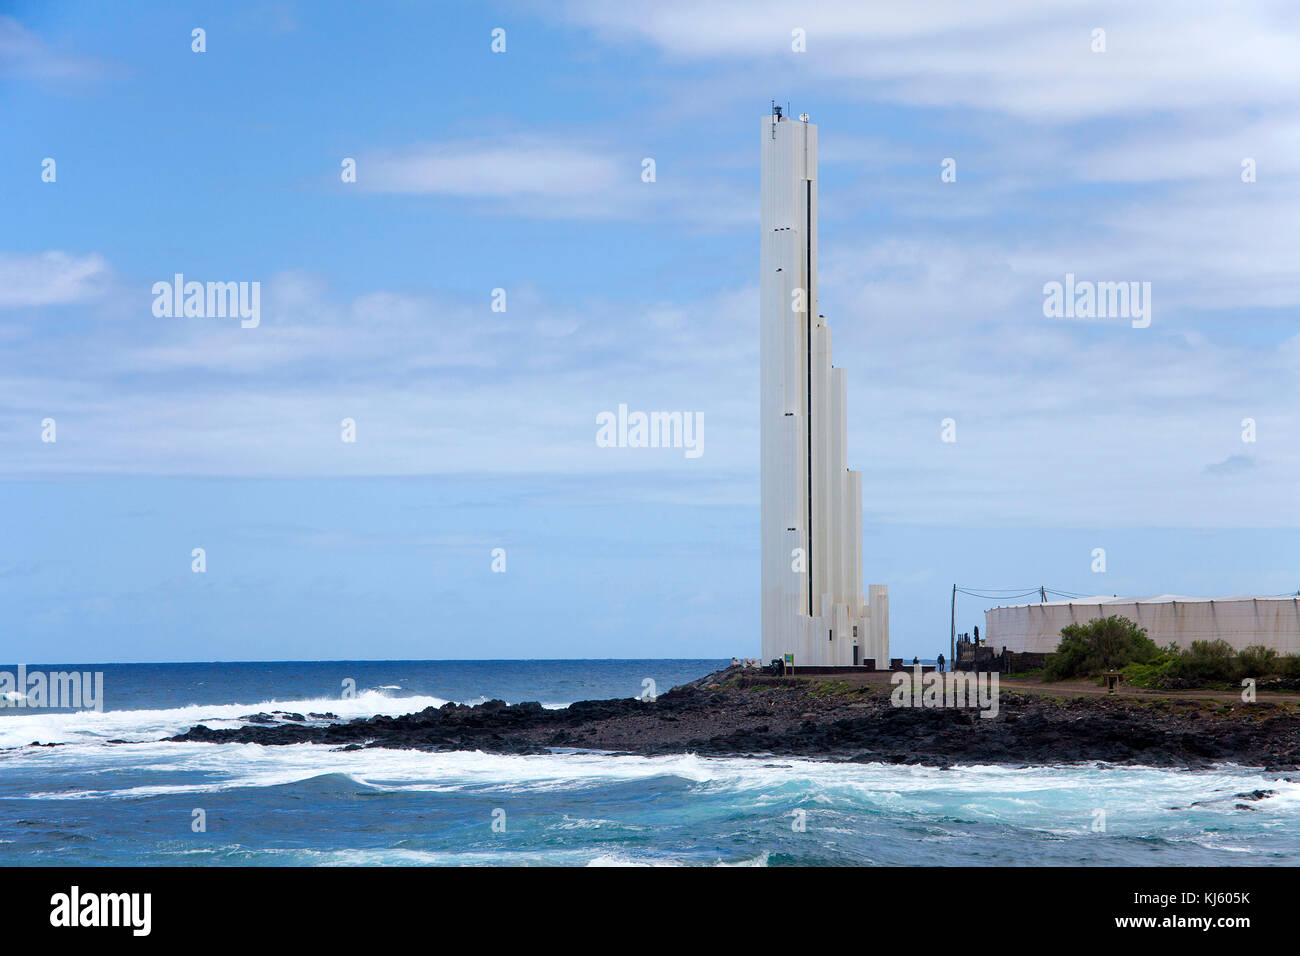 Faro de Punta del Hidalgo, futuristic lighthouse at Punta del Hidalgo, north of island, Tenerife island, Canary islands, Spain Stock Photo